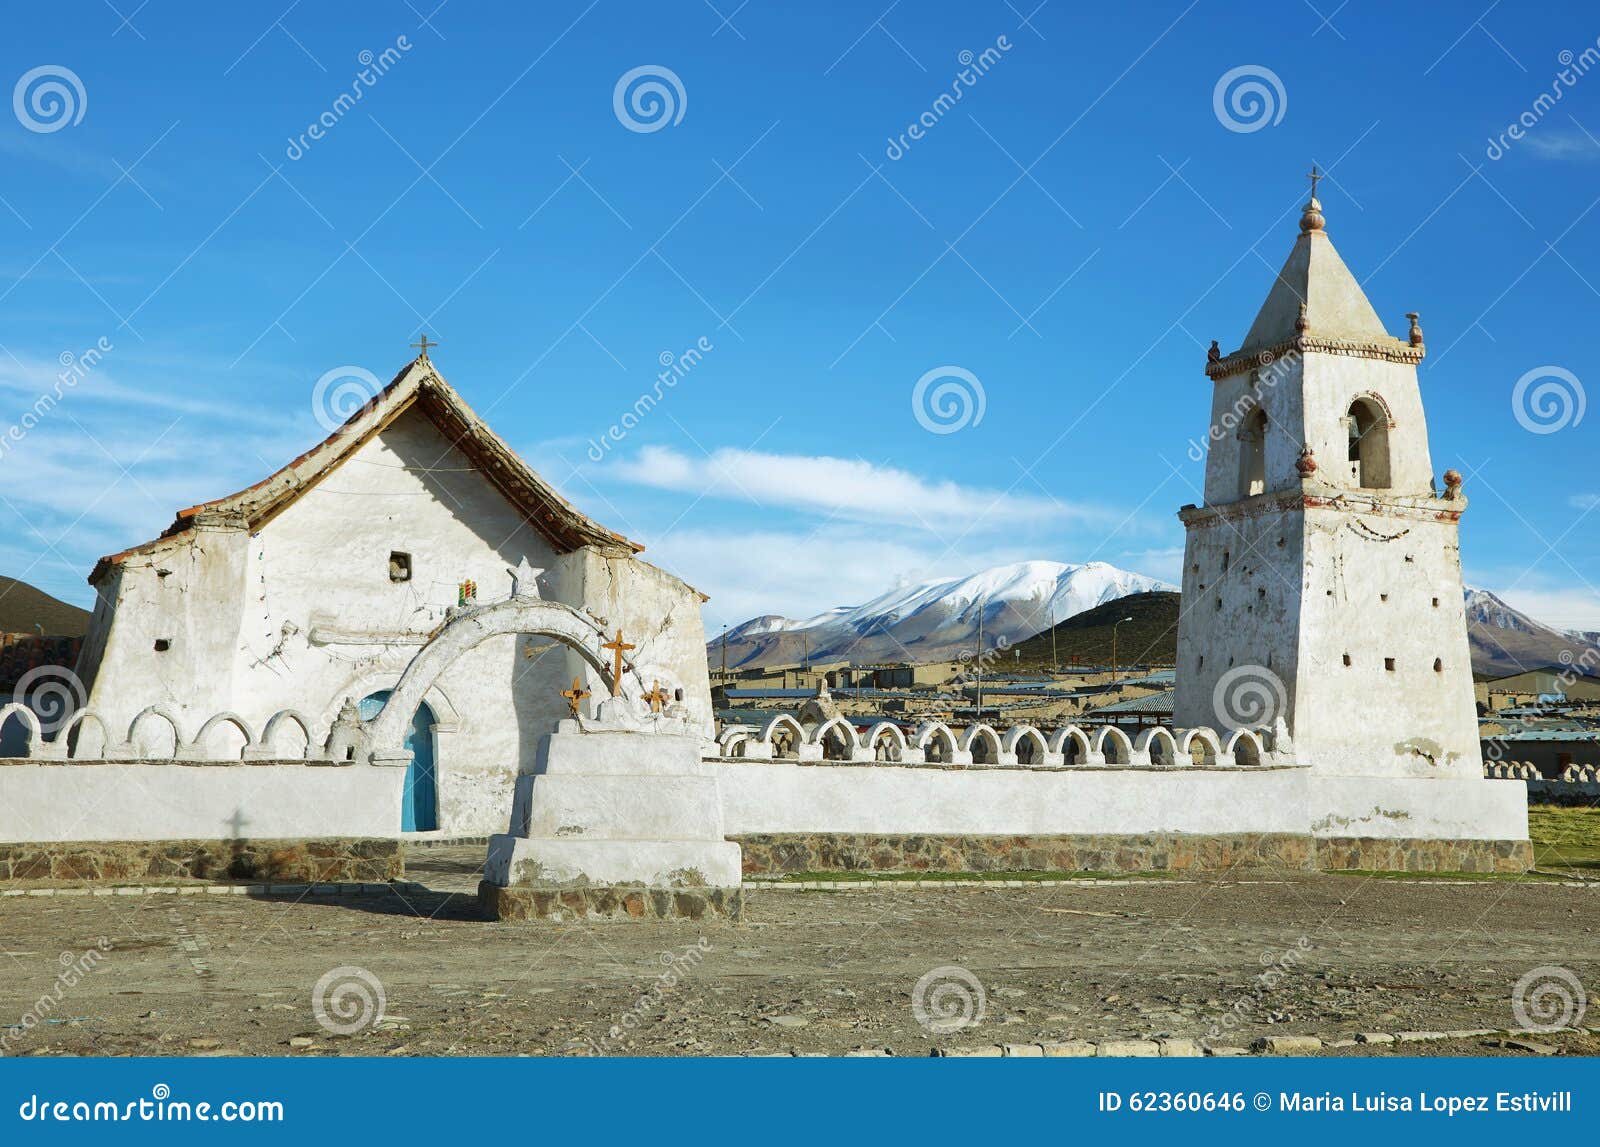 church in the volcano isluga national park